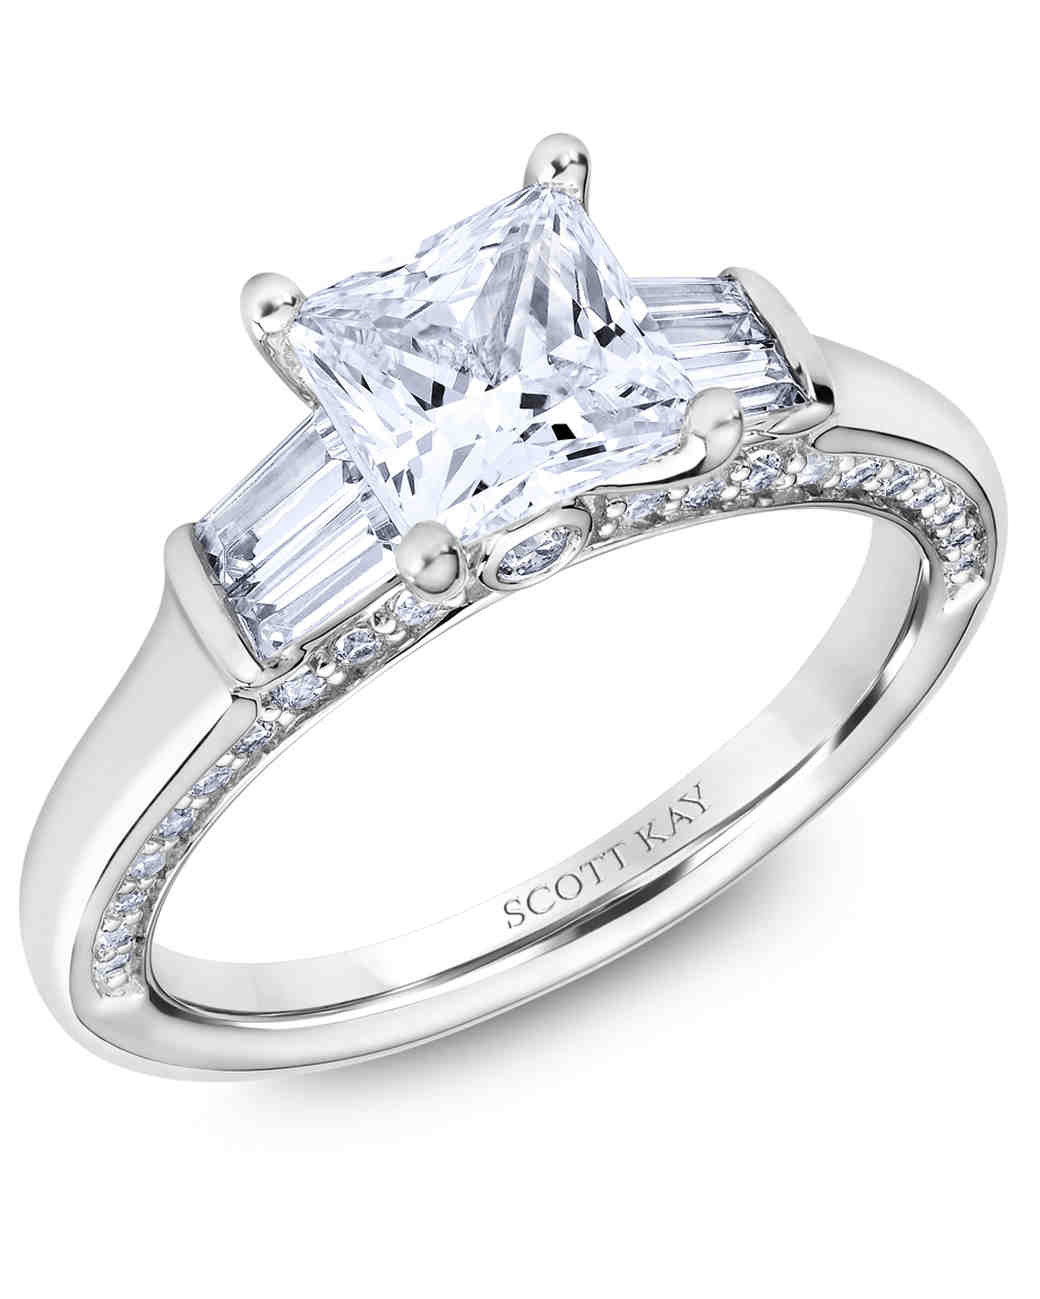 Princess Cut Rings Engagement
 30 Princess Cut Diamond Engagement Rings We Love